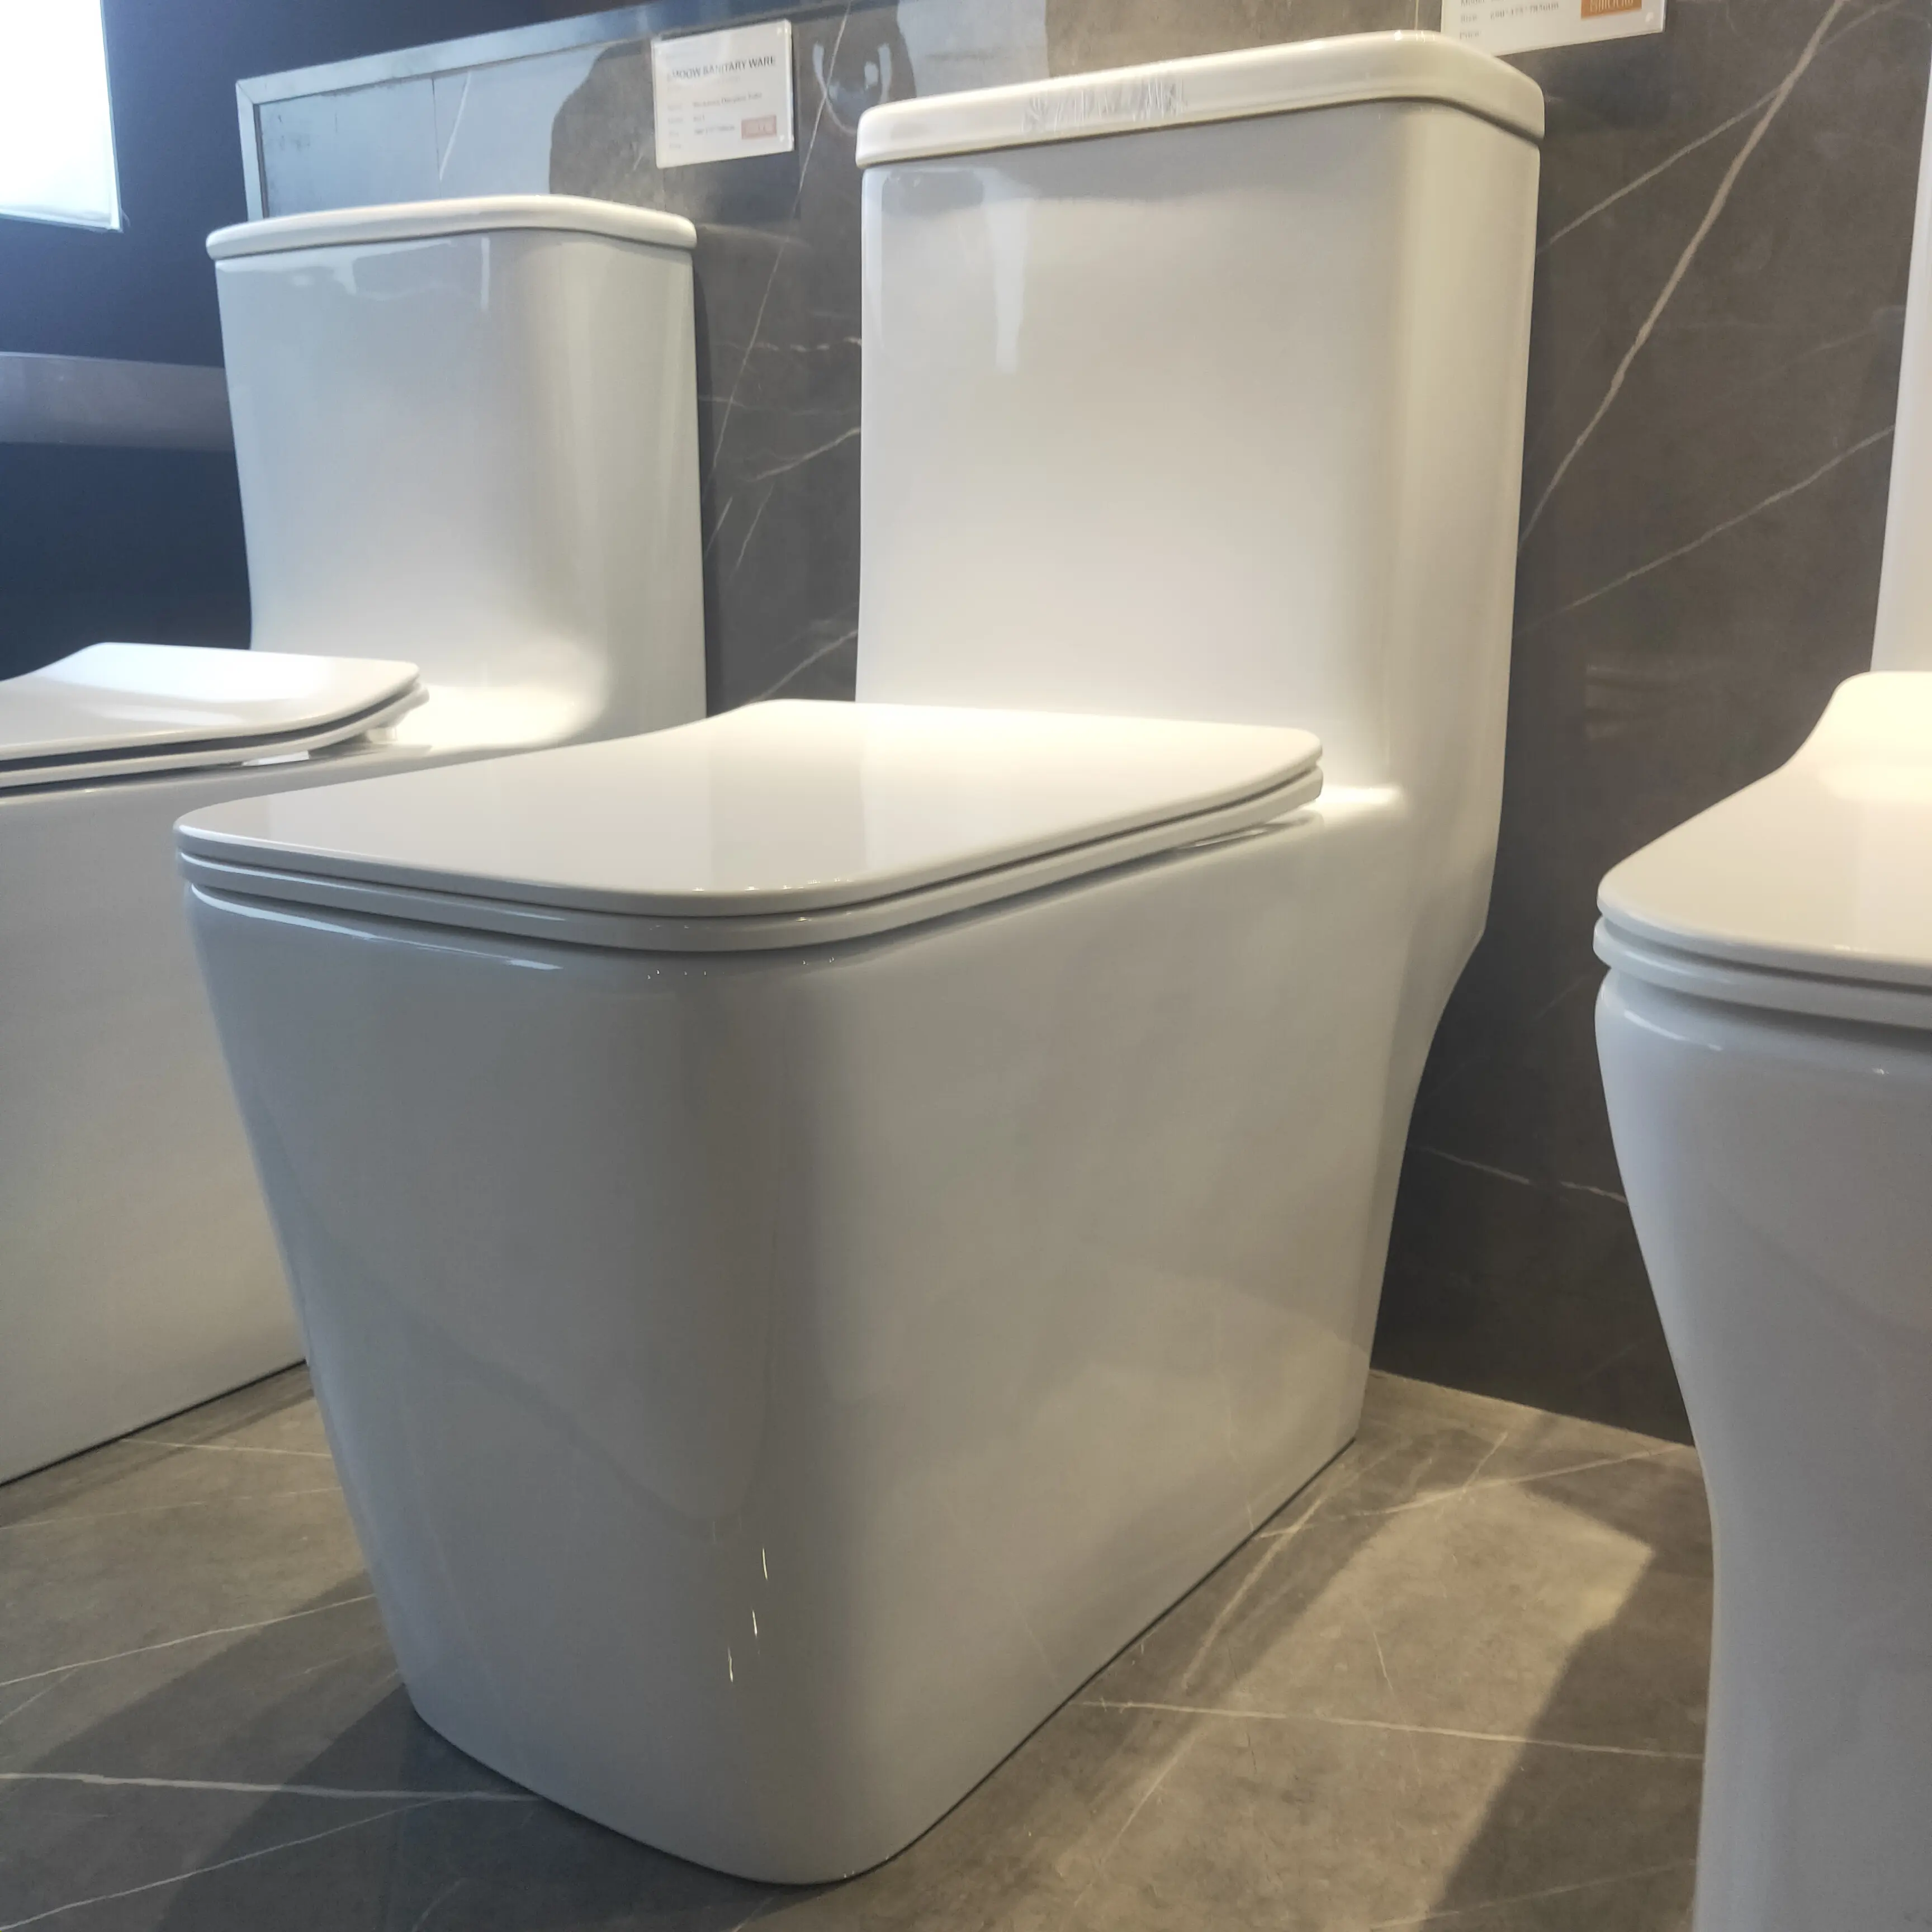 Toilet Kamar Mandi Satu Potong Persegi, Toilet Sederhana Kualitas Tinggi dengan Tanpa Bingkai